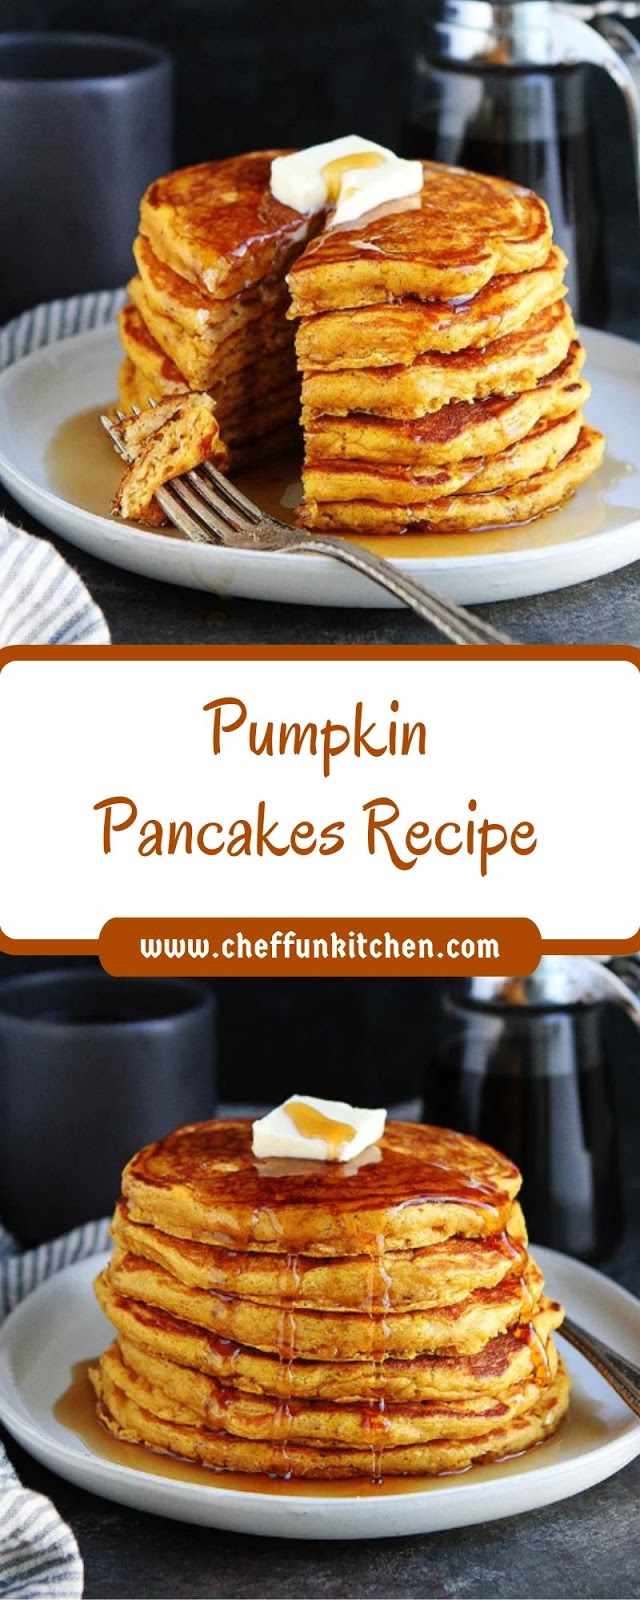 Pumpkin Pancakes Recipe